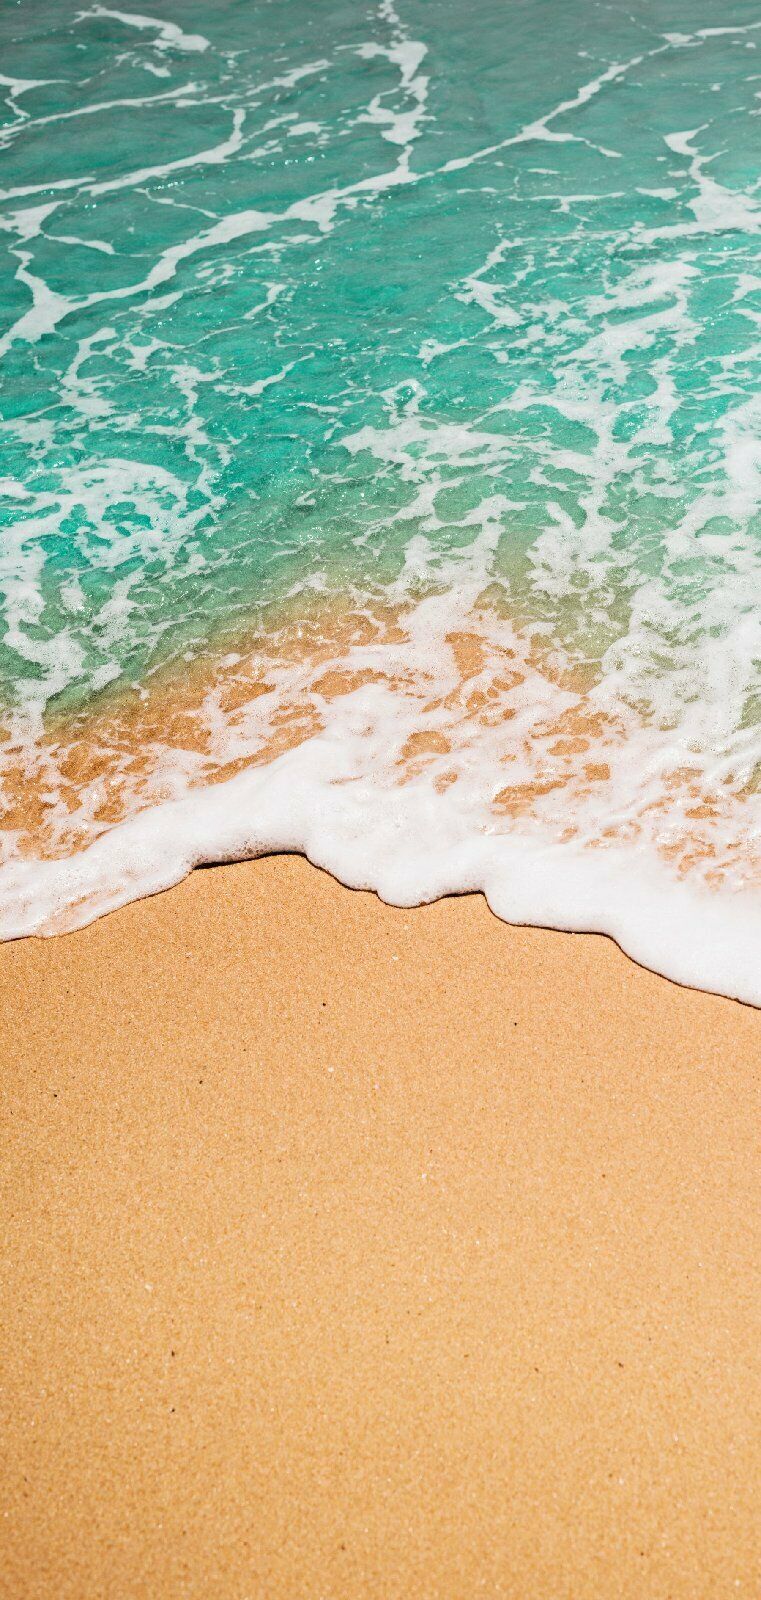 Türtapete Meer Türposter 100x200cm selbstklebend Schaum Strand Sand Urlaub türkis 1132